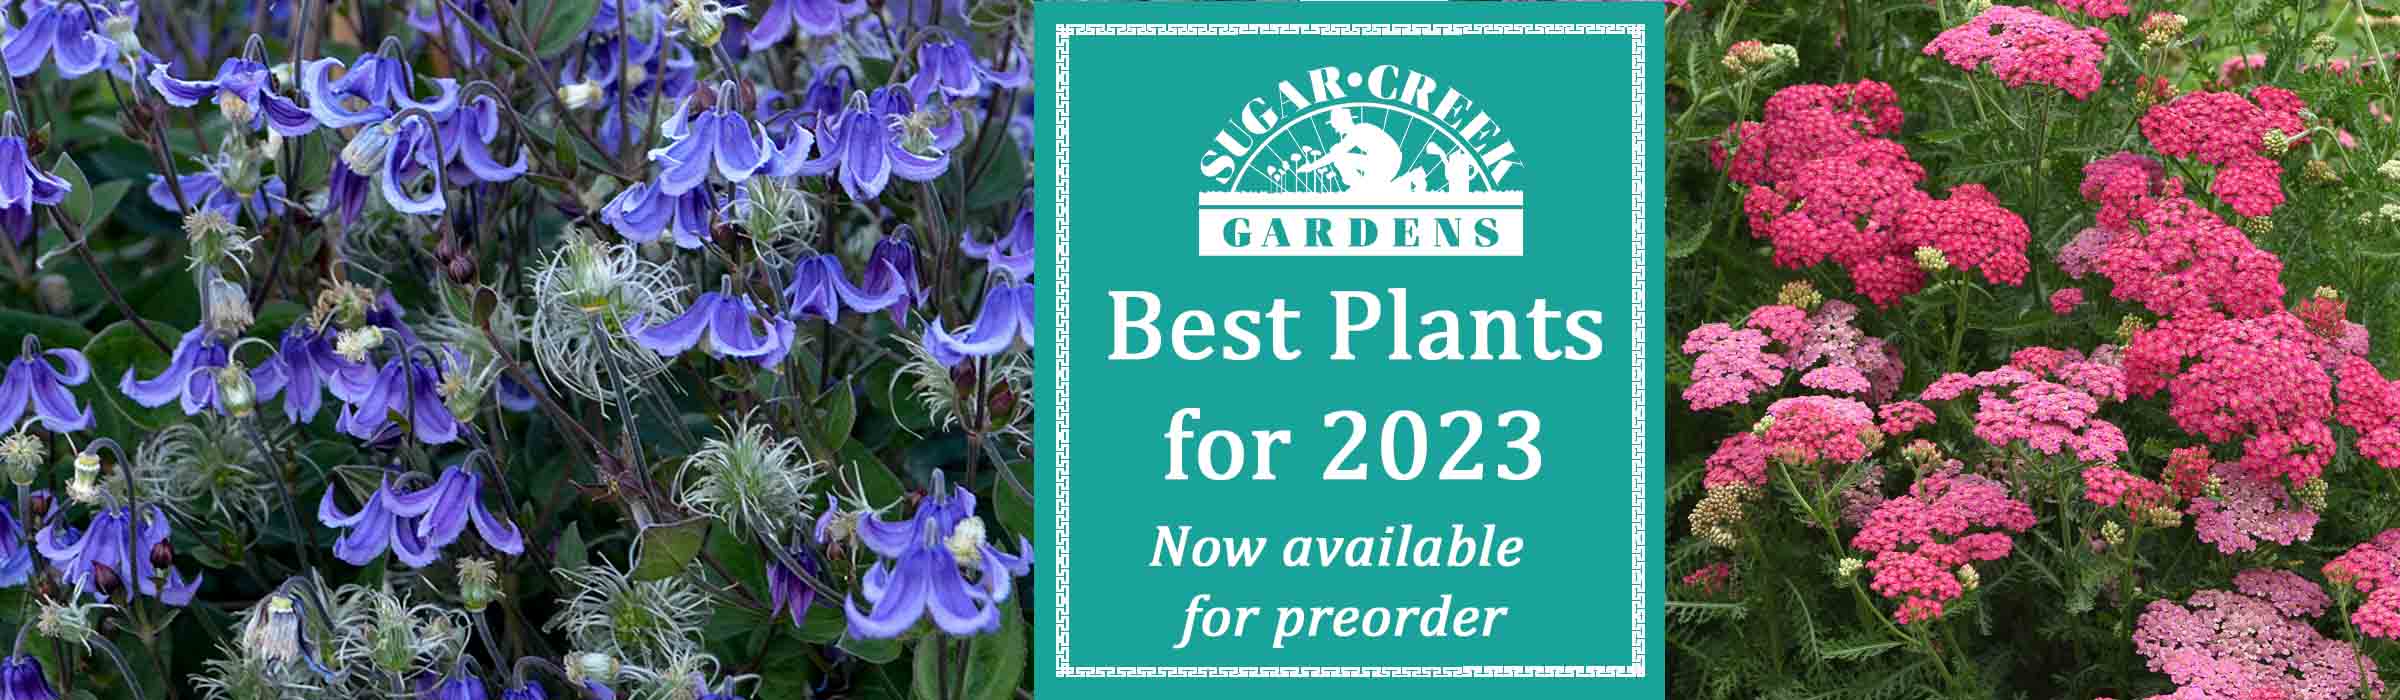 Best Plants for 2023 preorder banner